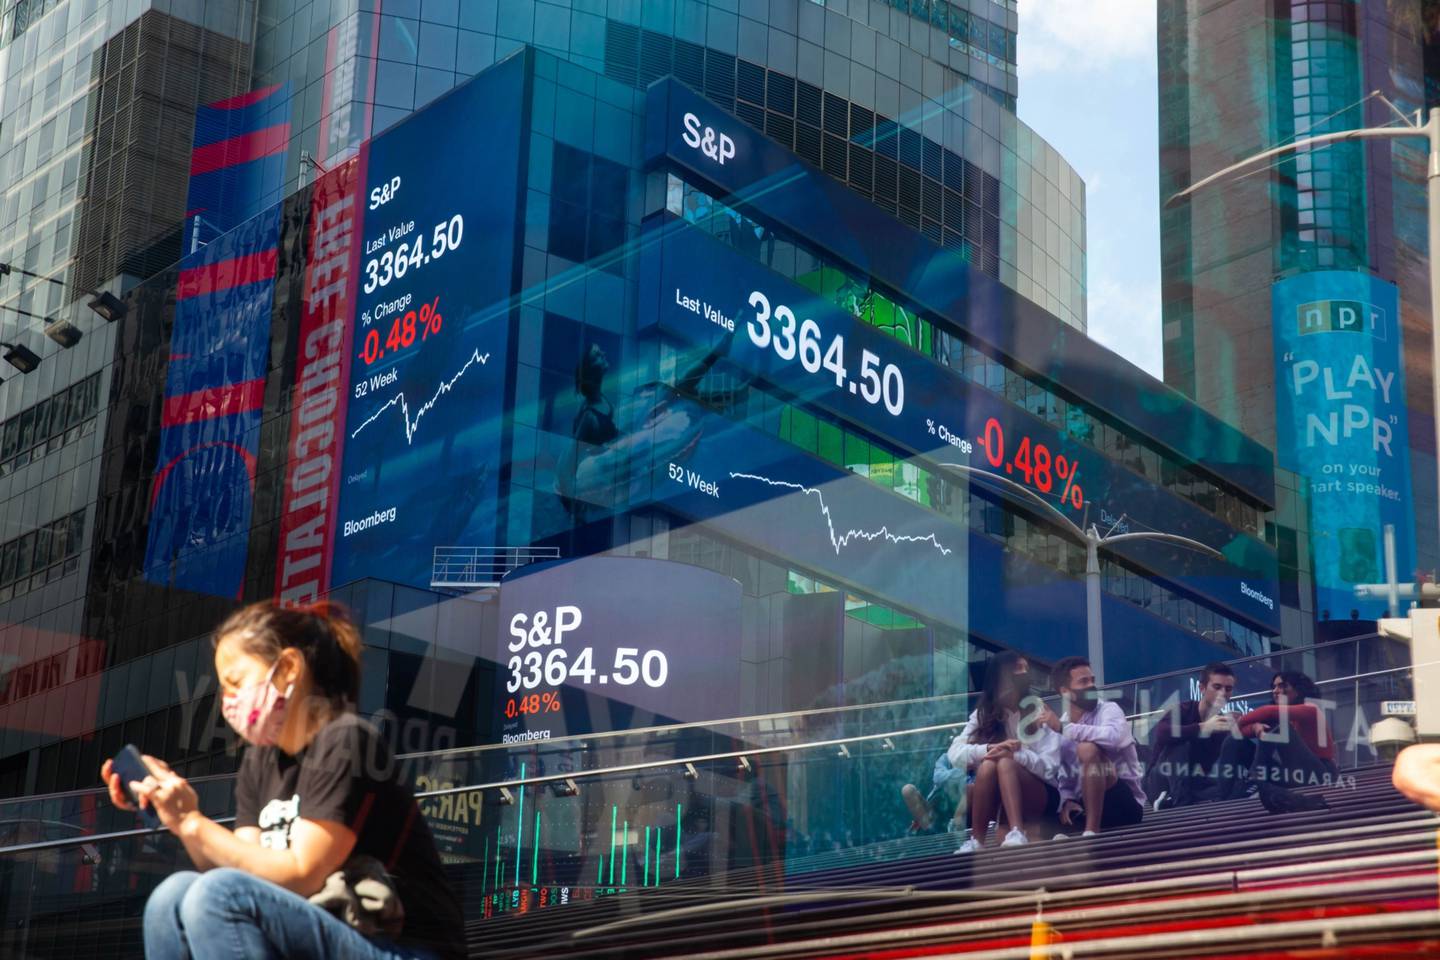 Monitors display S&P 500 market information at Morgan Stanley's headquarters in New York, U.S.